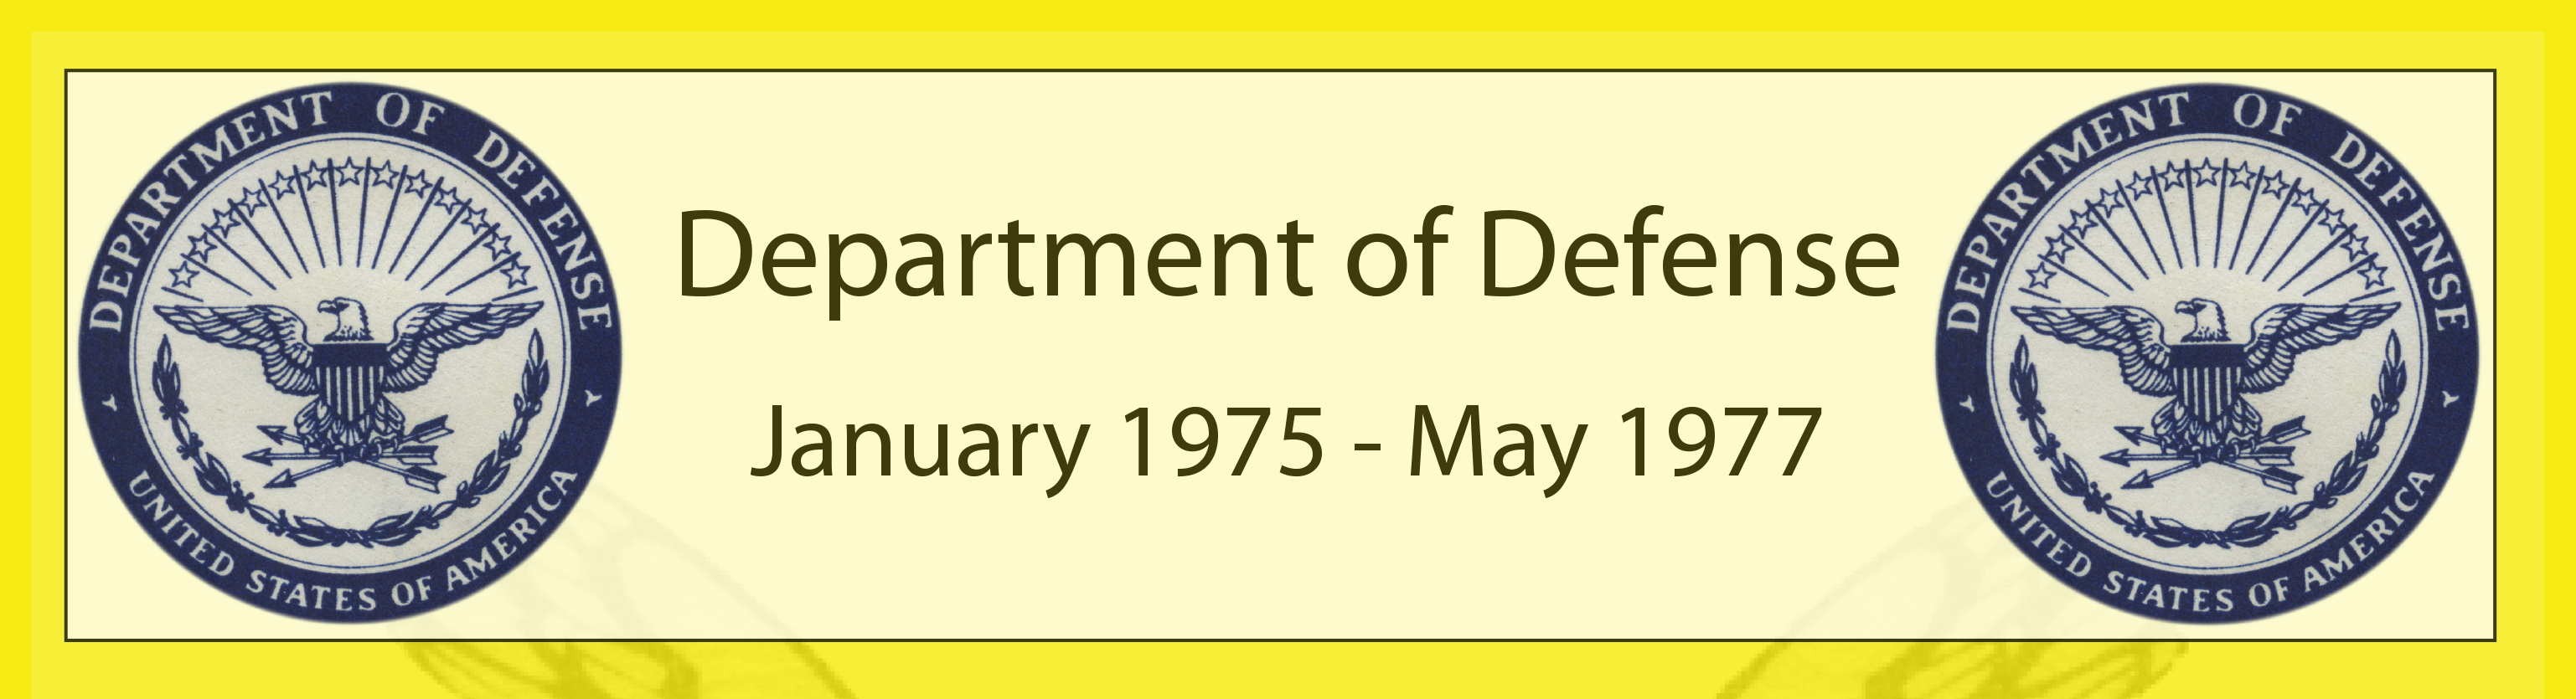 Department of Defense years 1975-1977